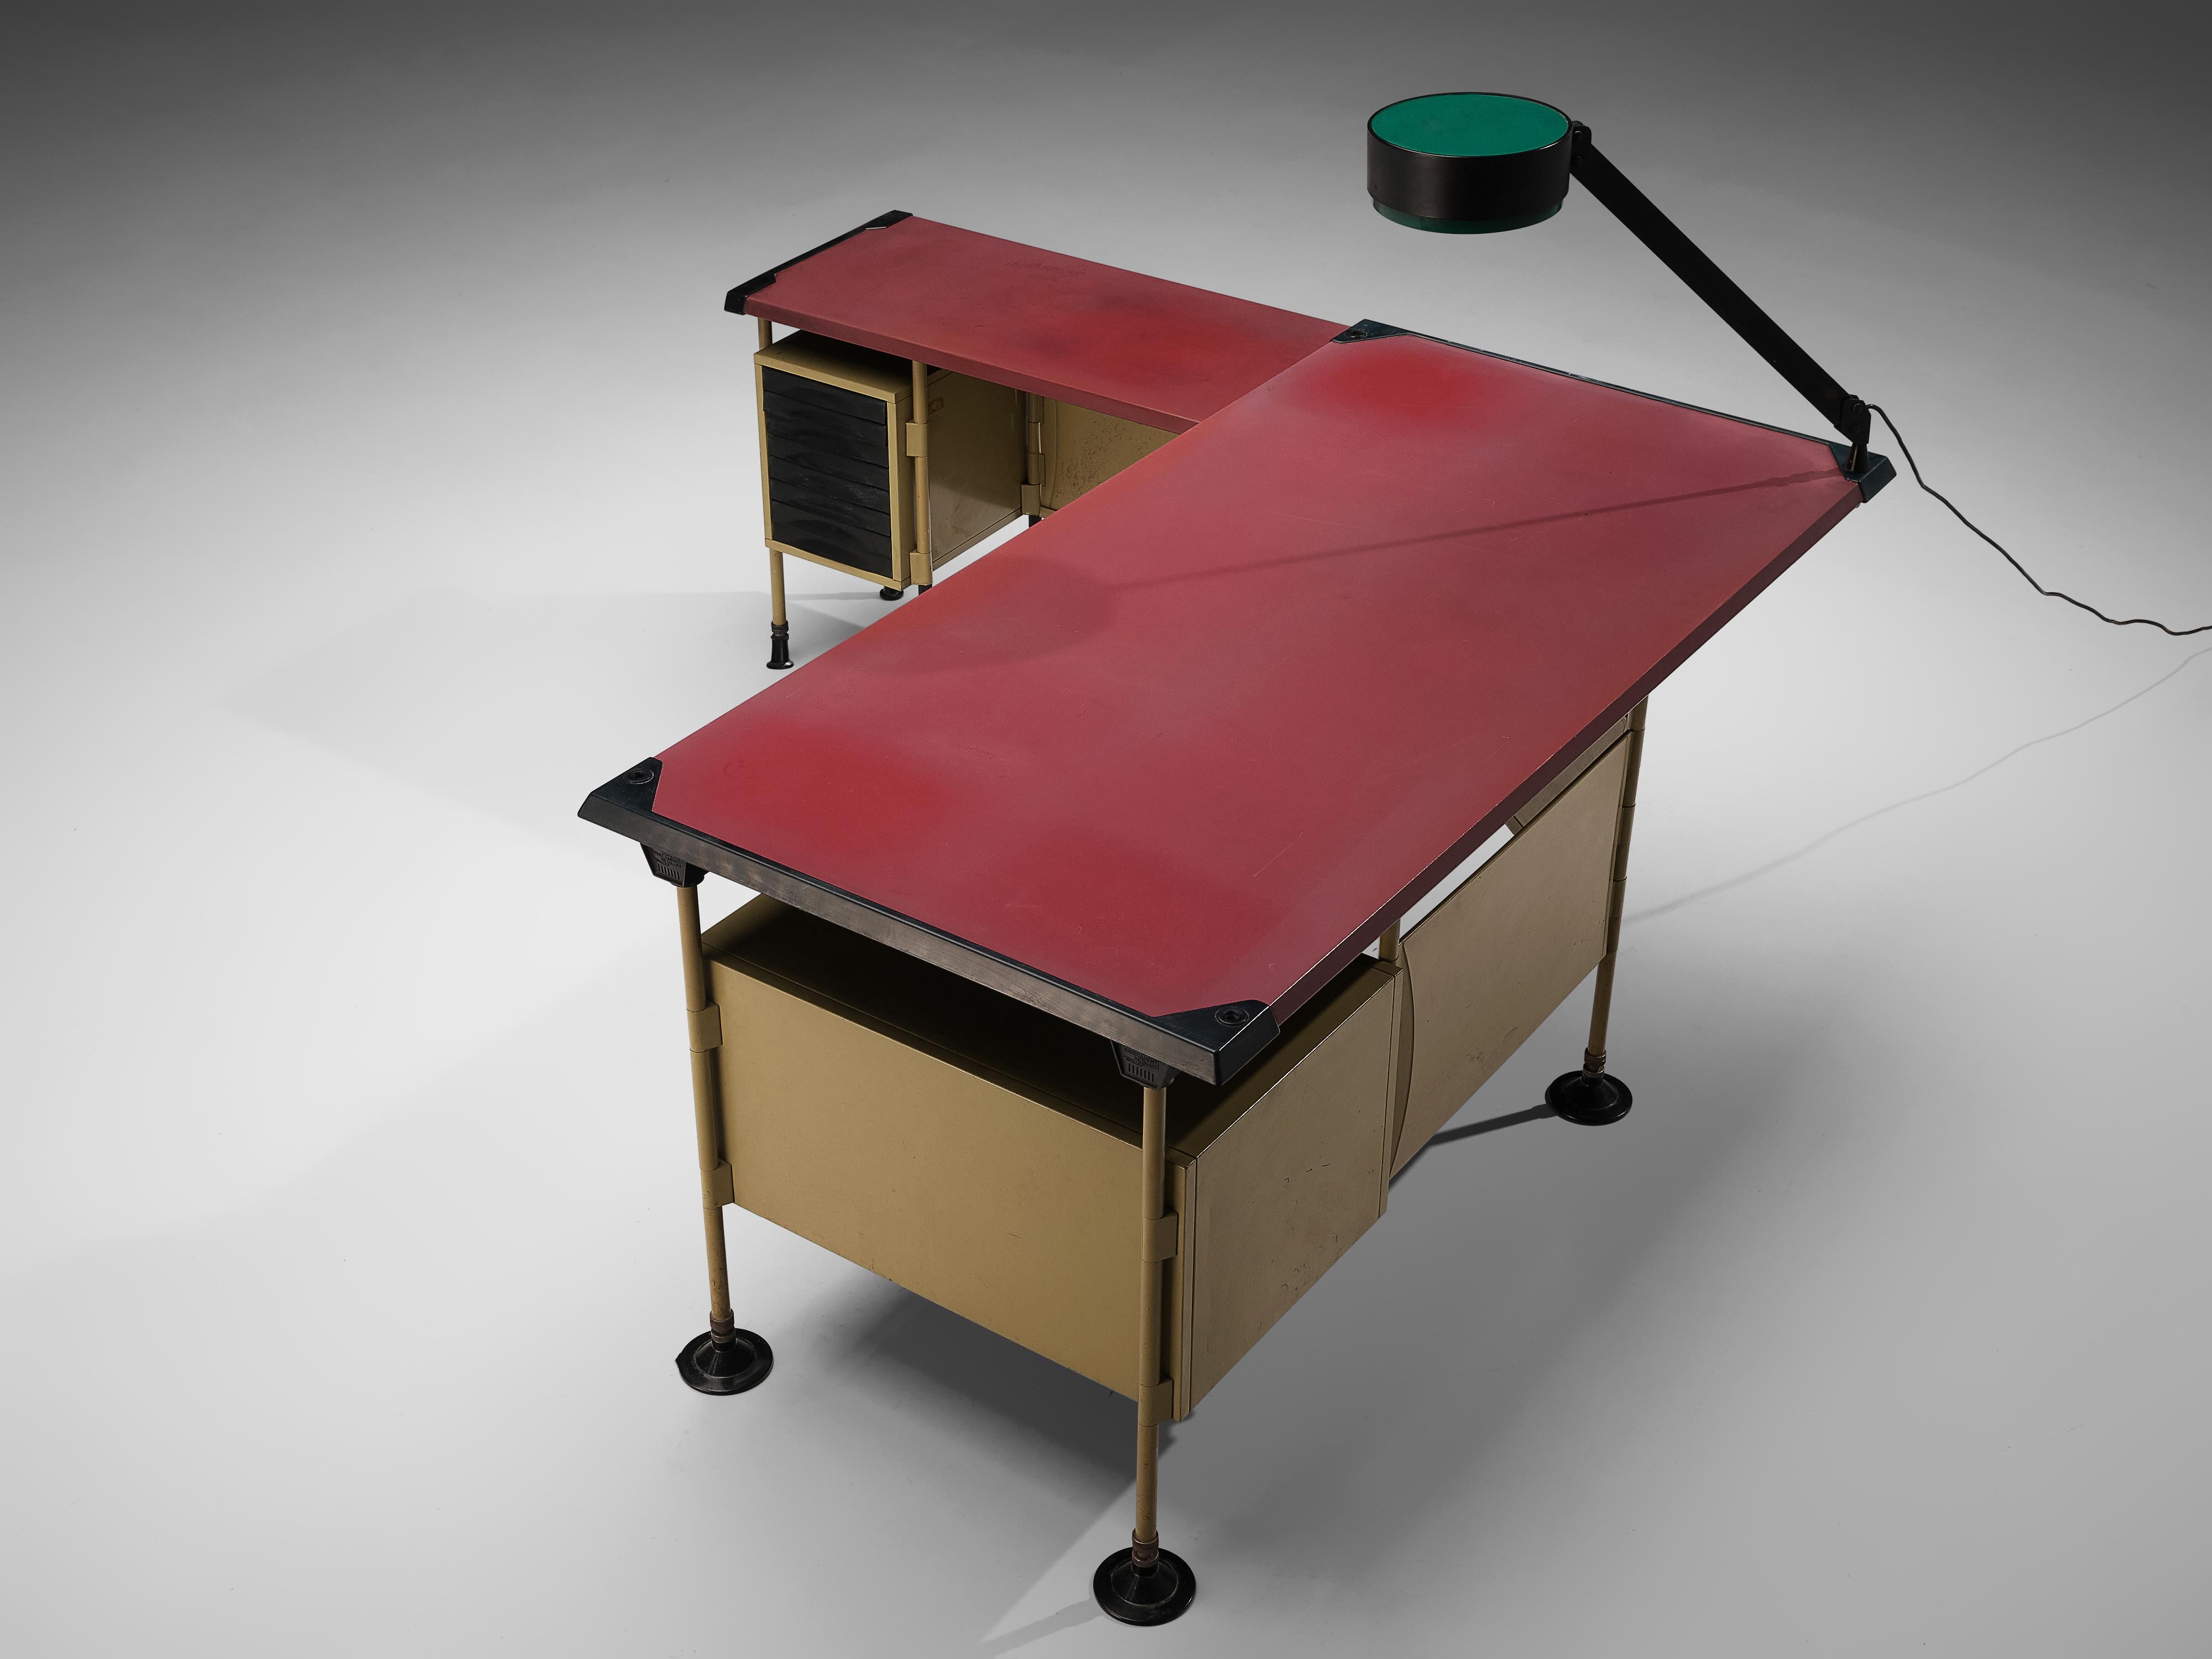 Metal Studio BBPR for Olivetti 'Spazio' Desk with Original Lamp